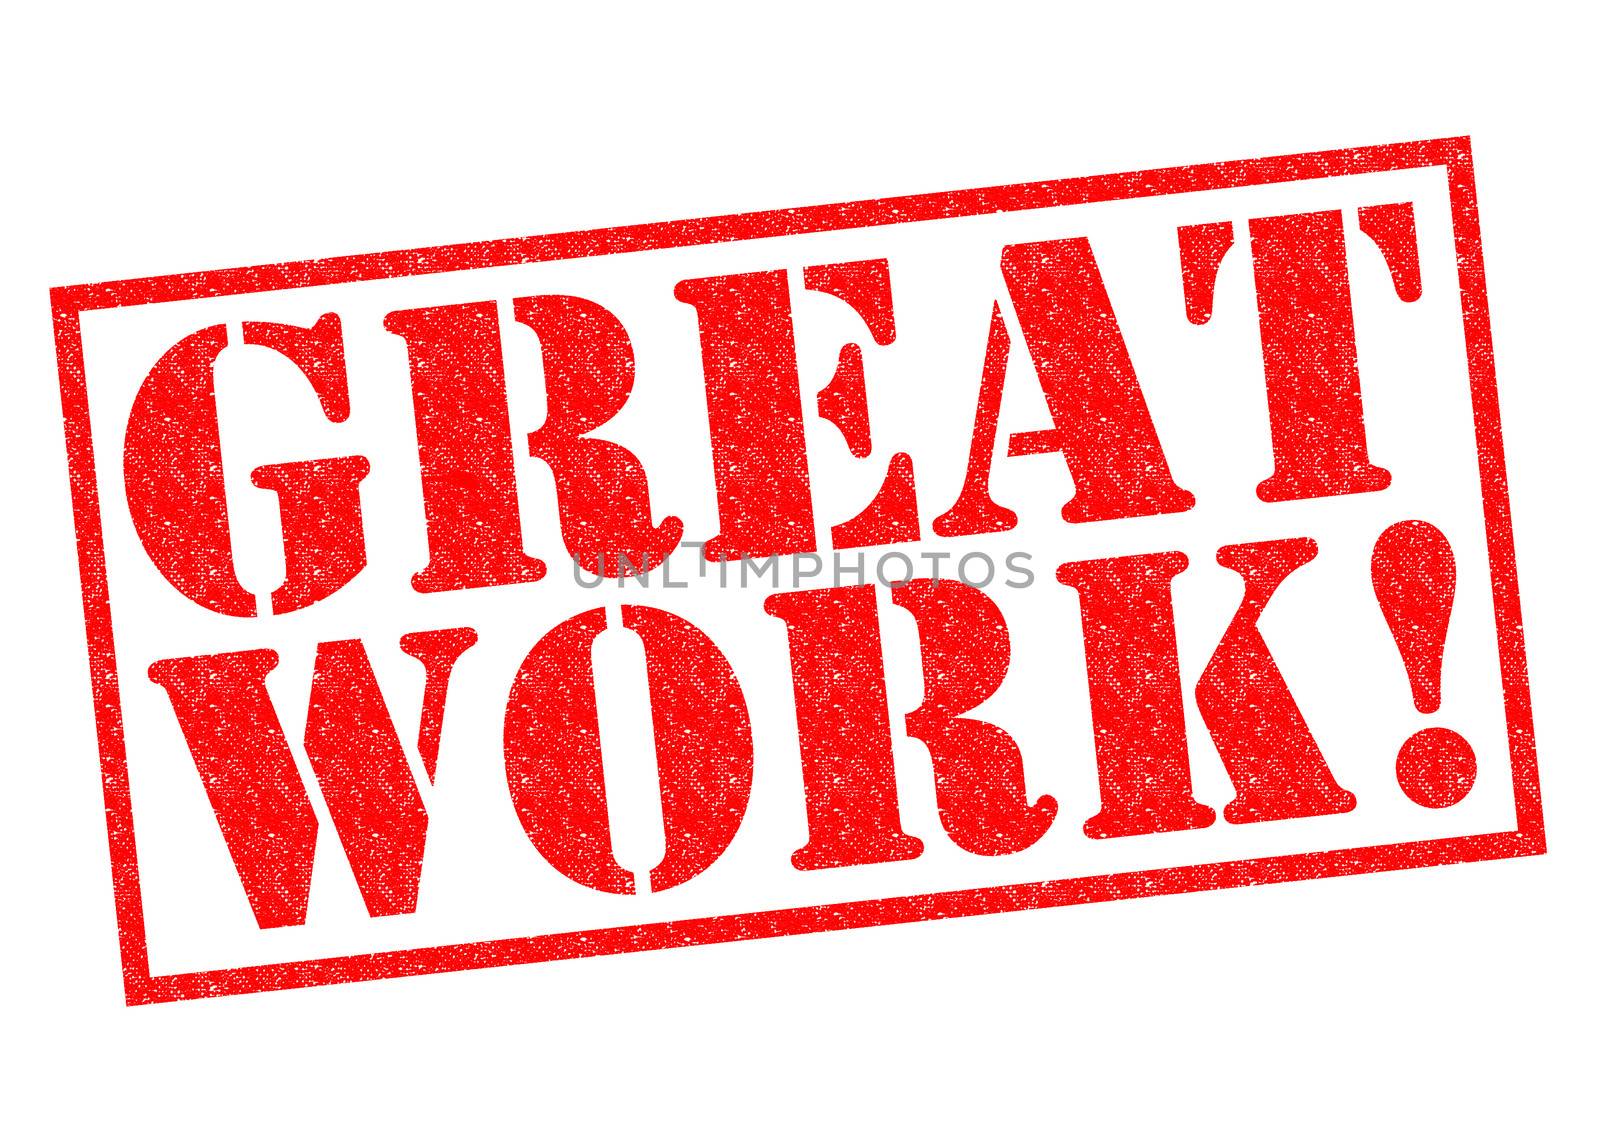 GREAT WORK! by chrisdorney